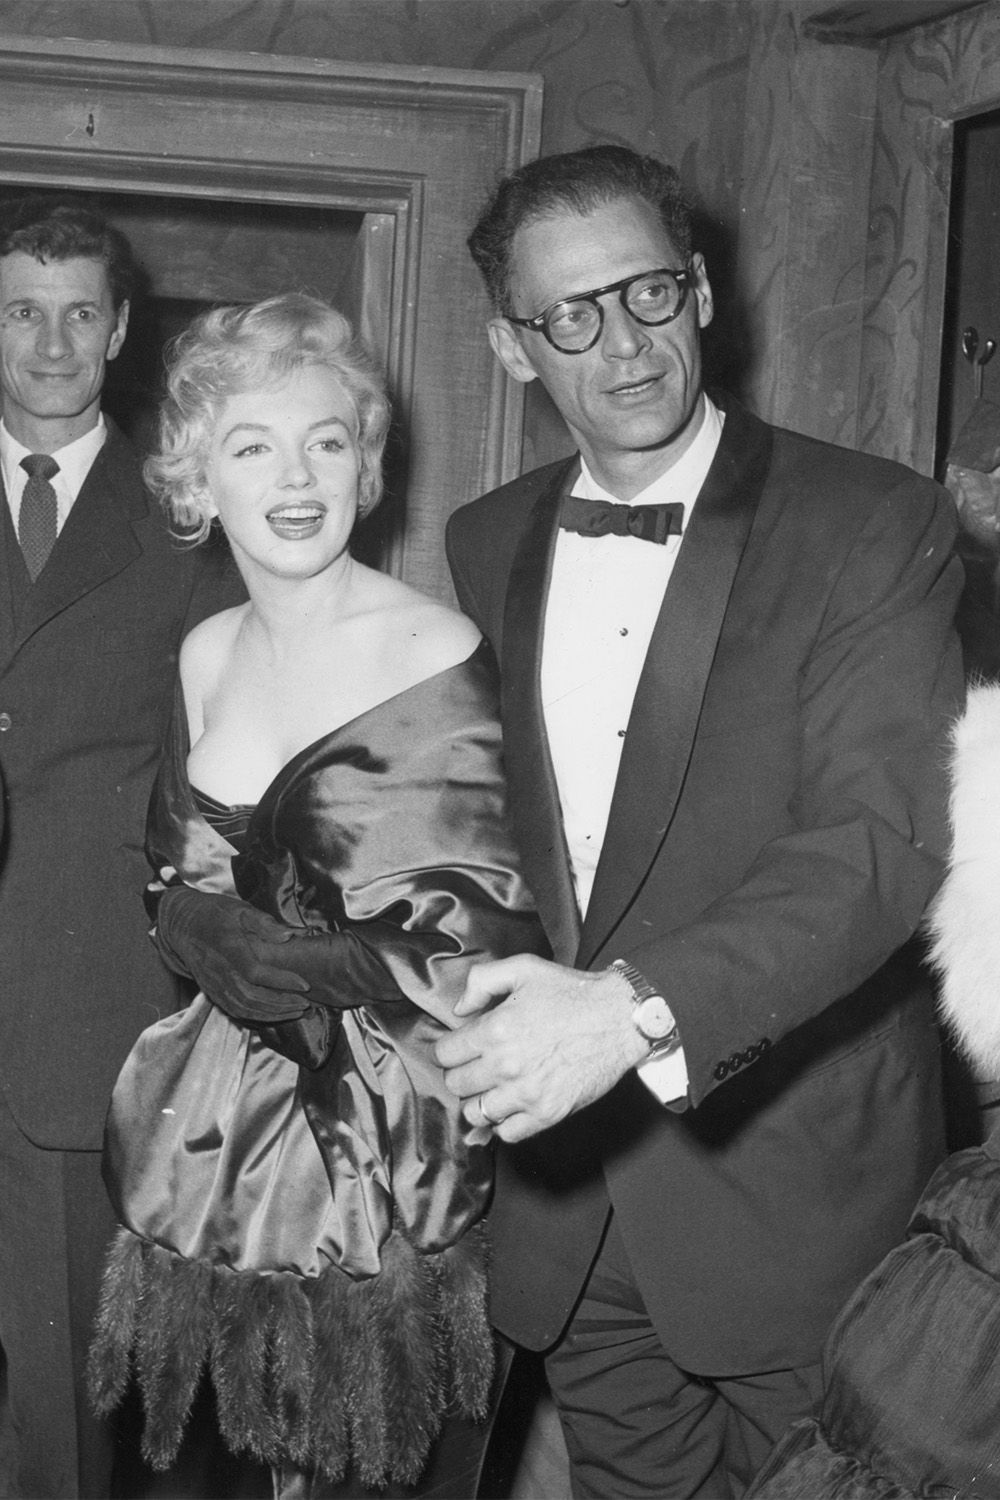 Eik Wat is er mis Oplossen 43 Rare Photos from Marilyn Monroe's Turbulent Marriages